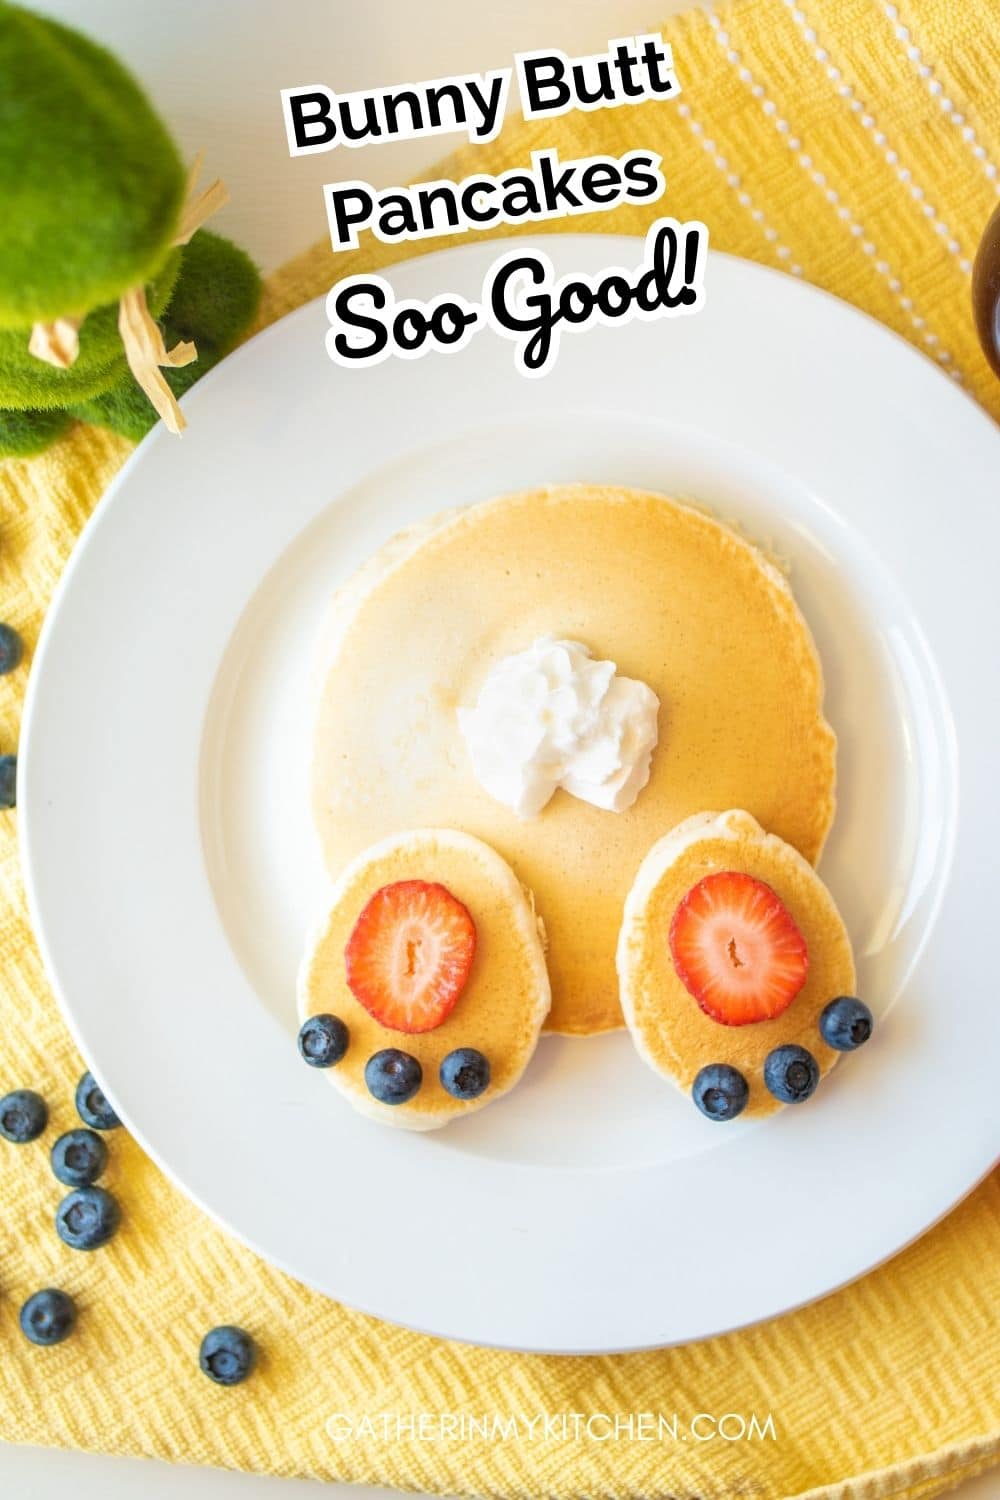 Pin image: bunny butt pancake with "Bunny Butt Pancakes: so good!" overlaid.